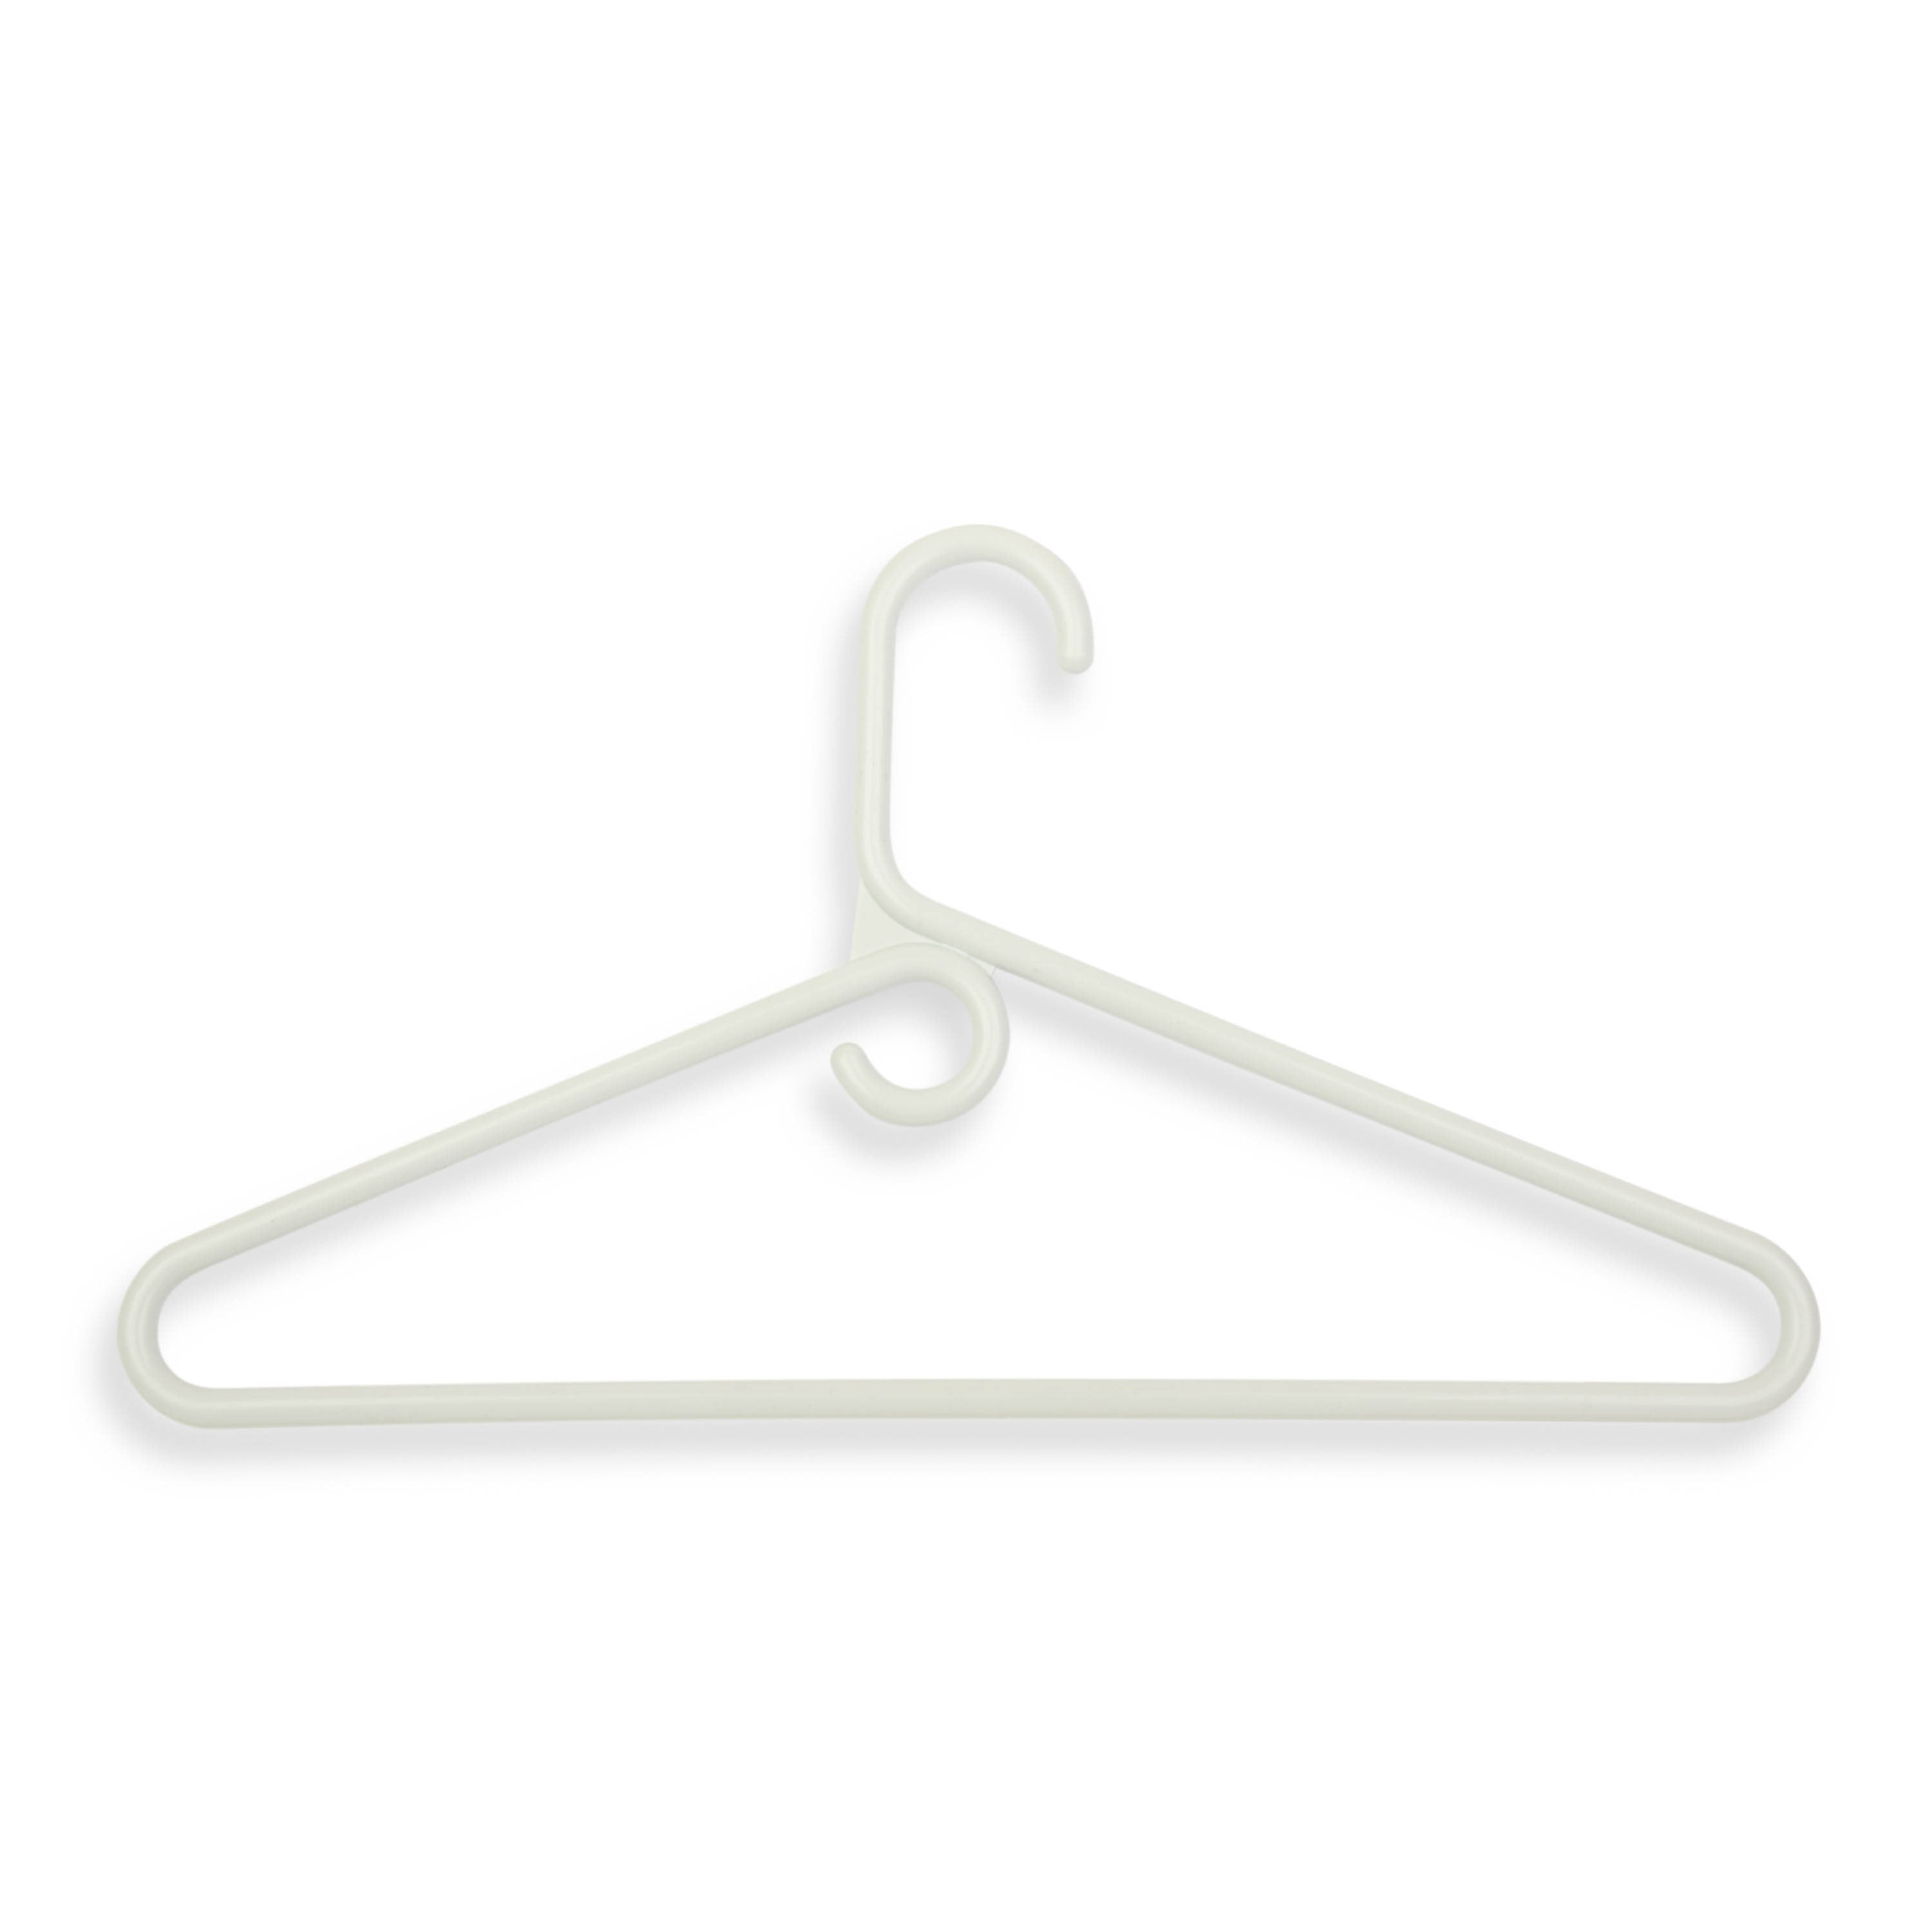 Kitcheniva Plastic Hangers Durable Slim Pack of 50 Gray, Pack of 50 -  Gerbes Super Markets